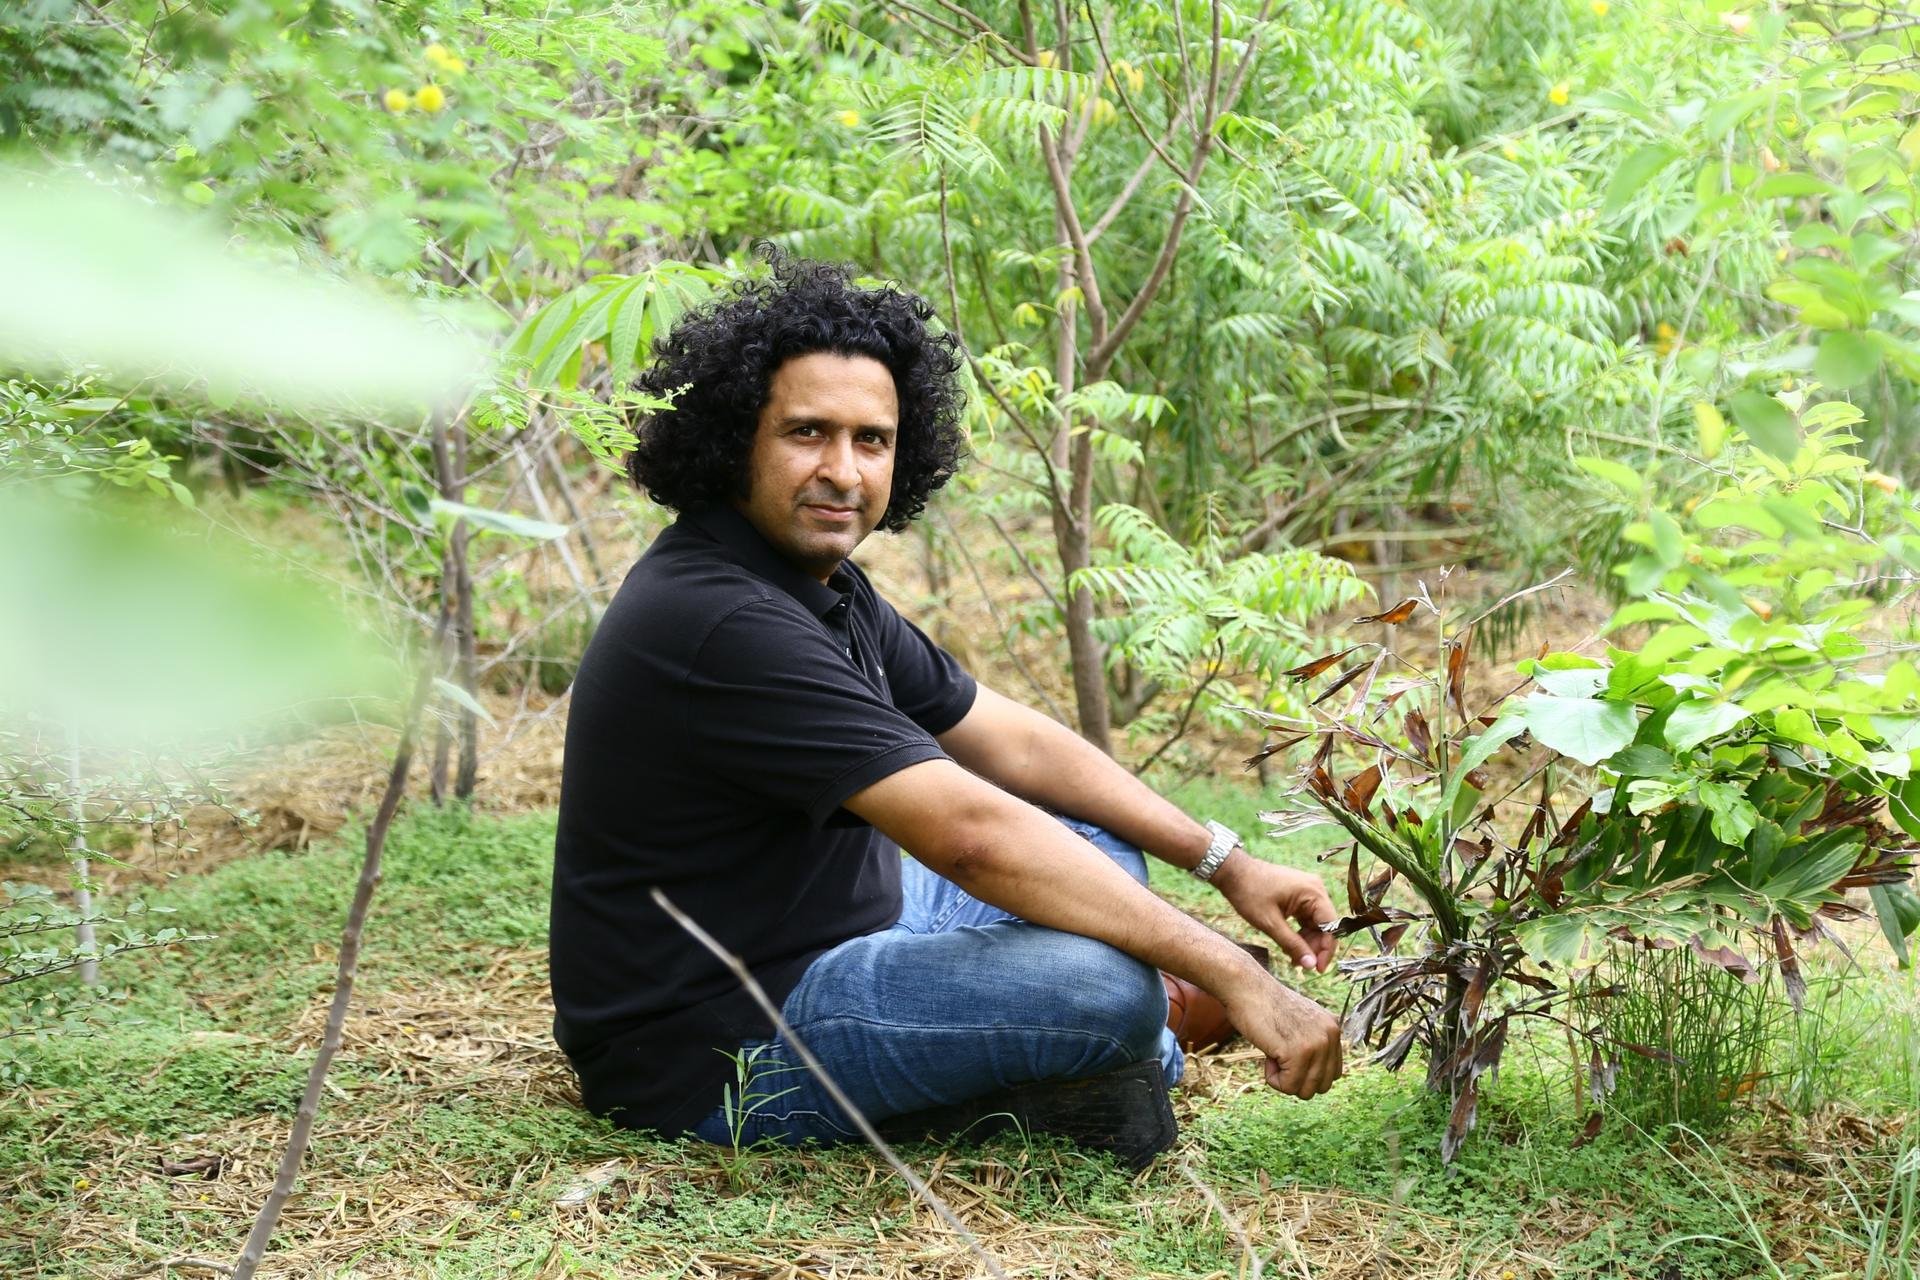 Shahzad Qureshi, founder of Urban Forest, in Karachi, Pakistan.